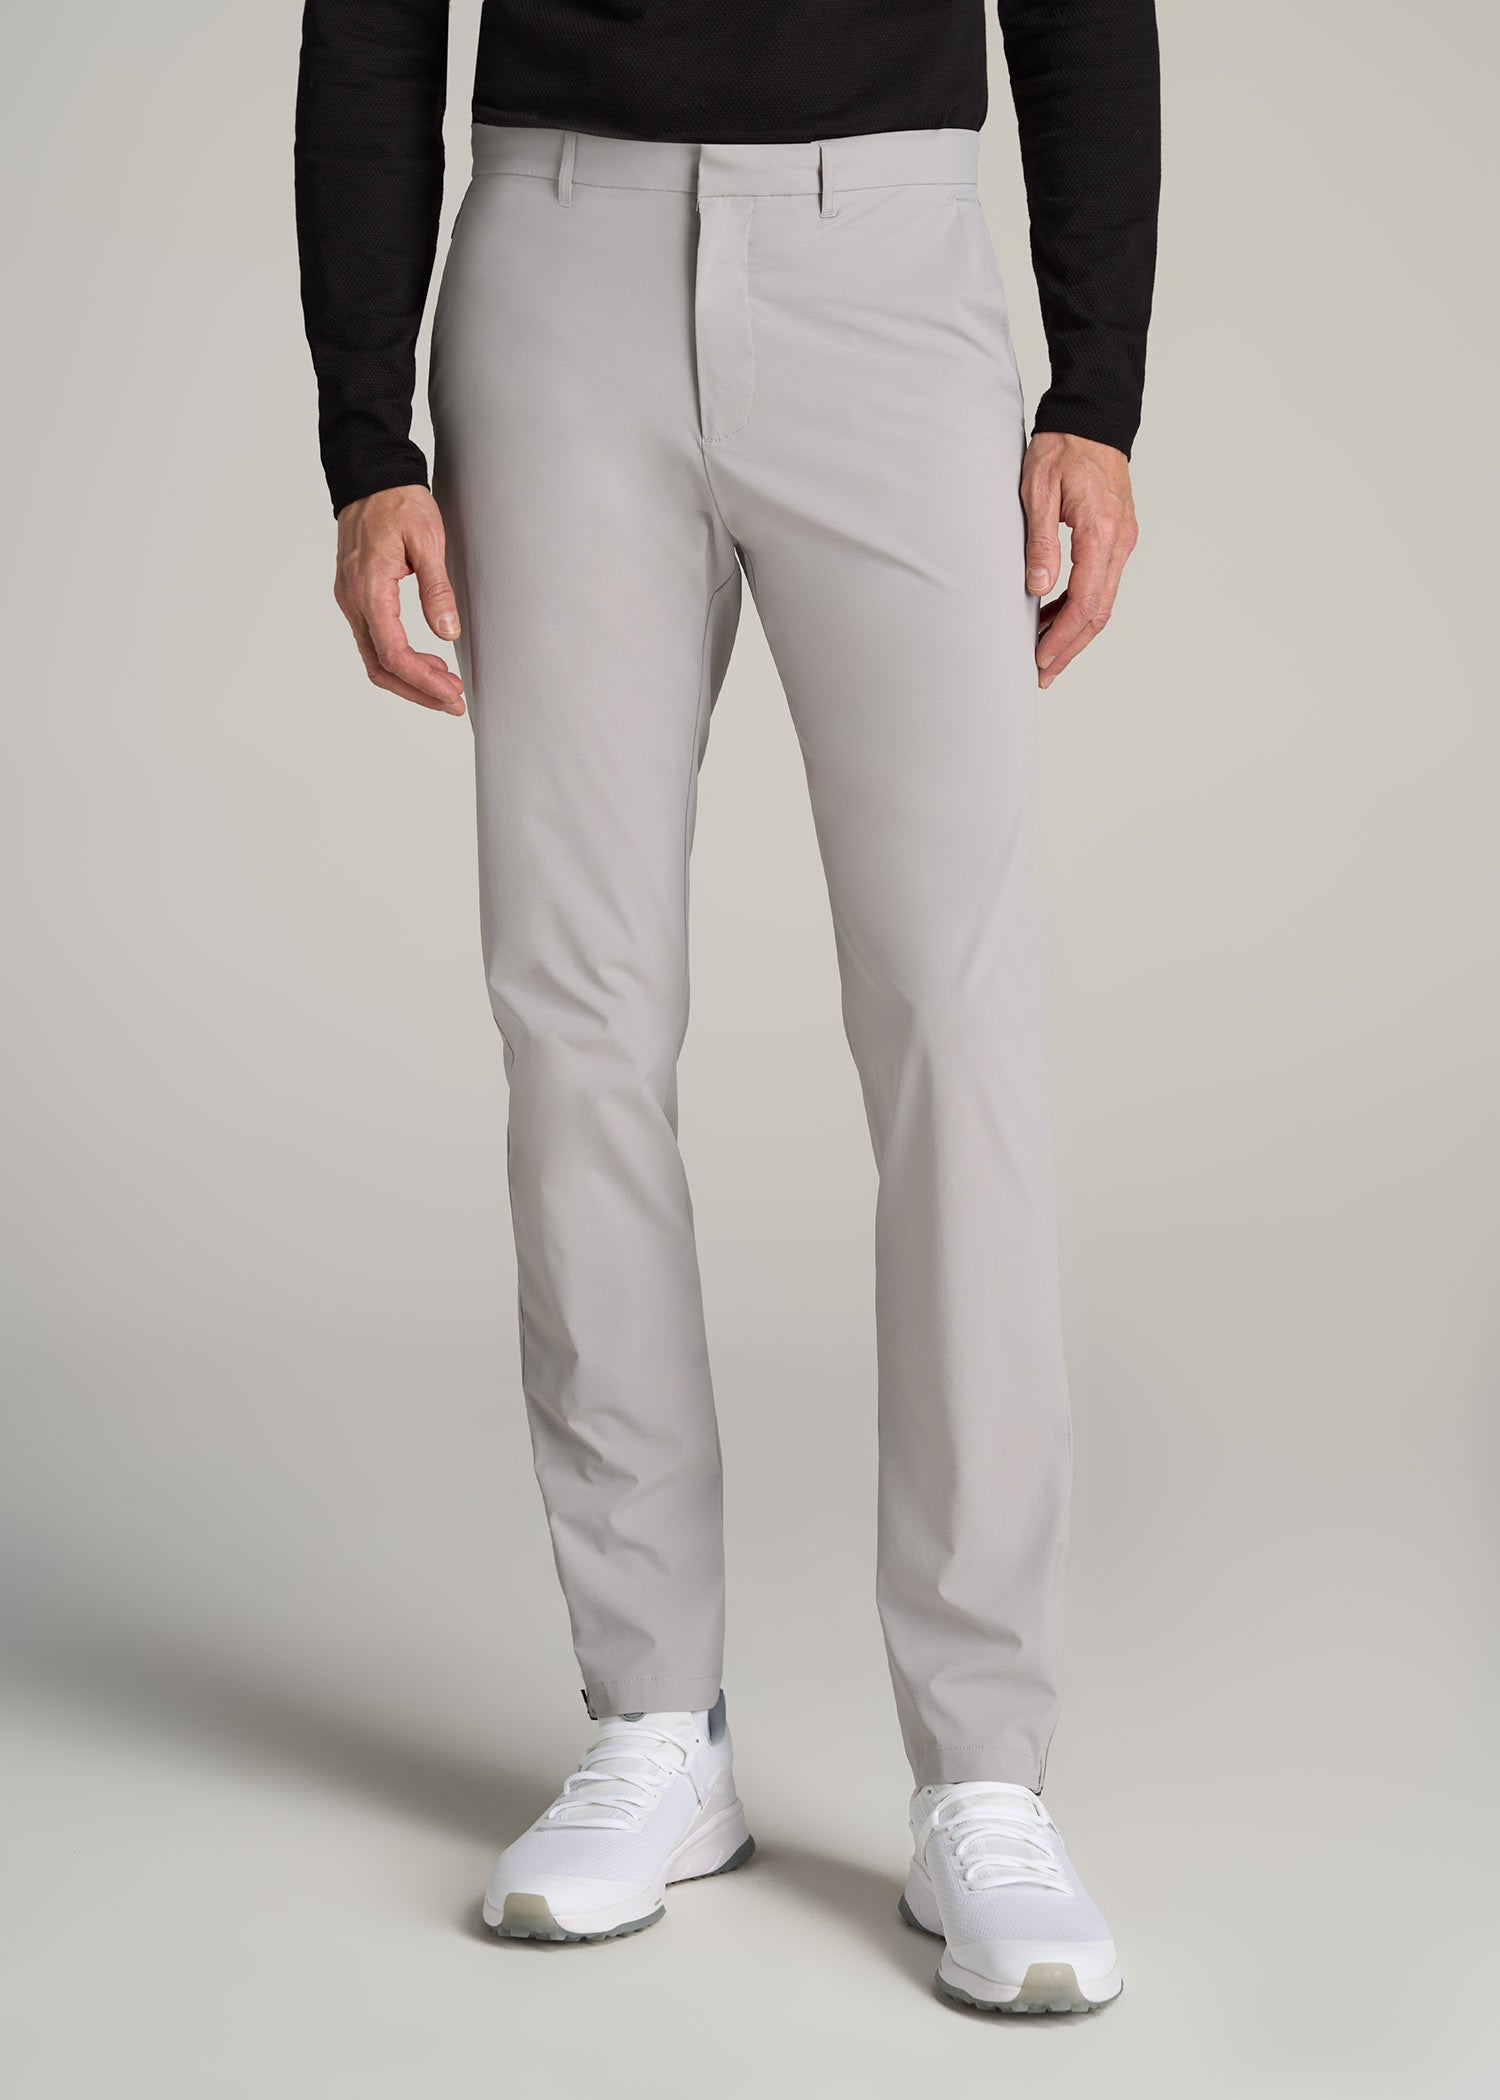 Grey Pants for Men, Pants